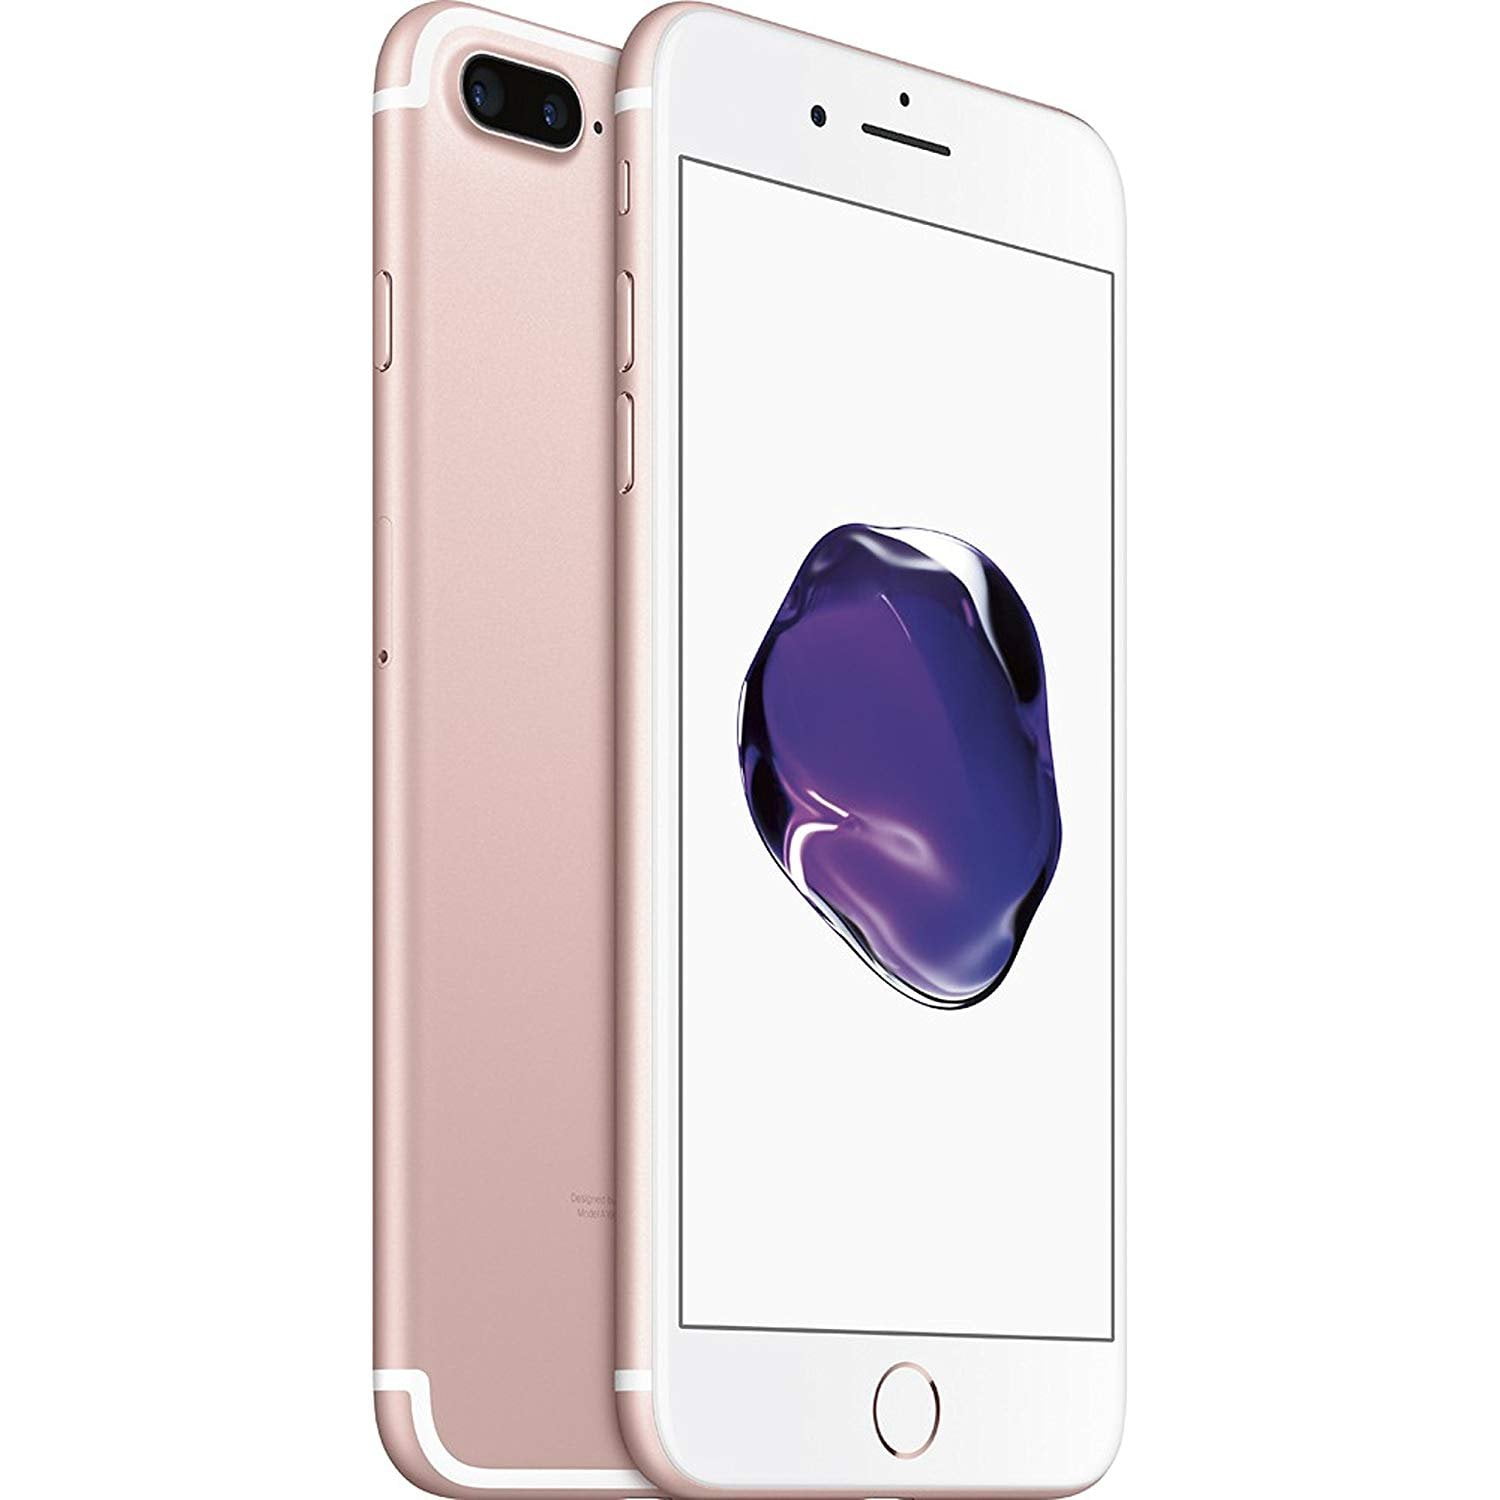 Adolescencia Conductividad Poesía Restored Apple iPhone 7 Plus 128 GB Rose Gold GSM Unlocked to T-Mobile AT&T  Metro PCS (Refurbished) - Walmart.com